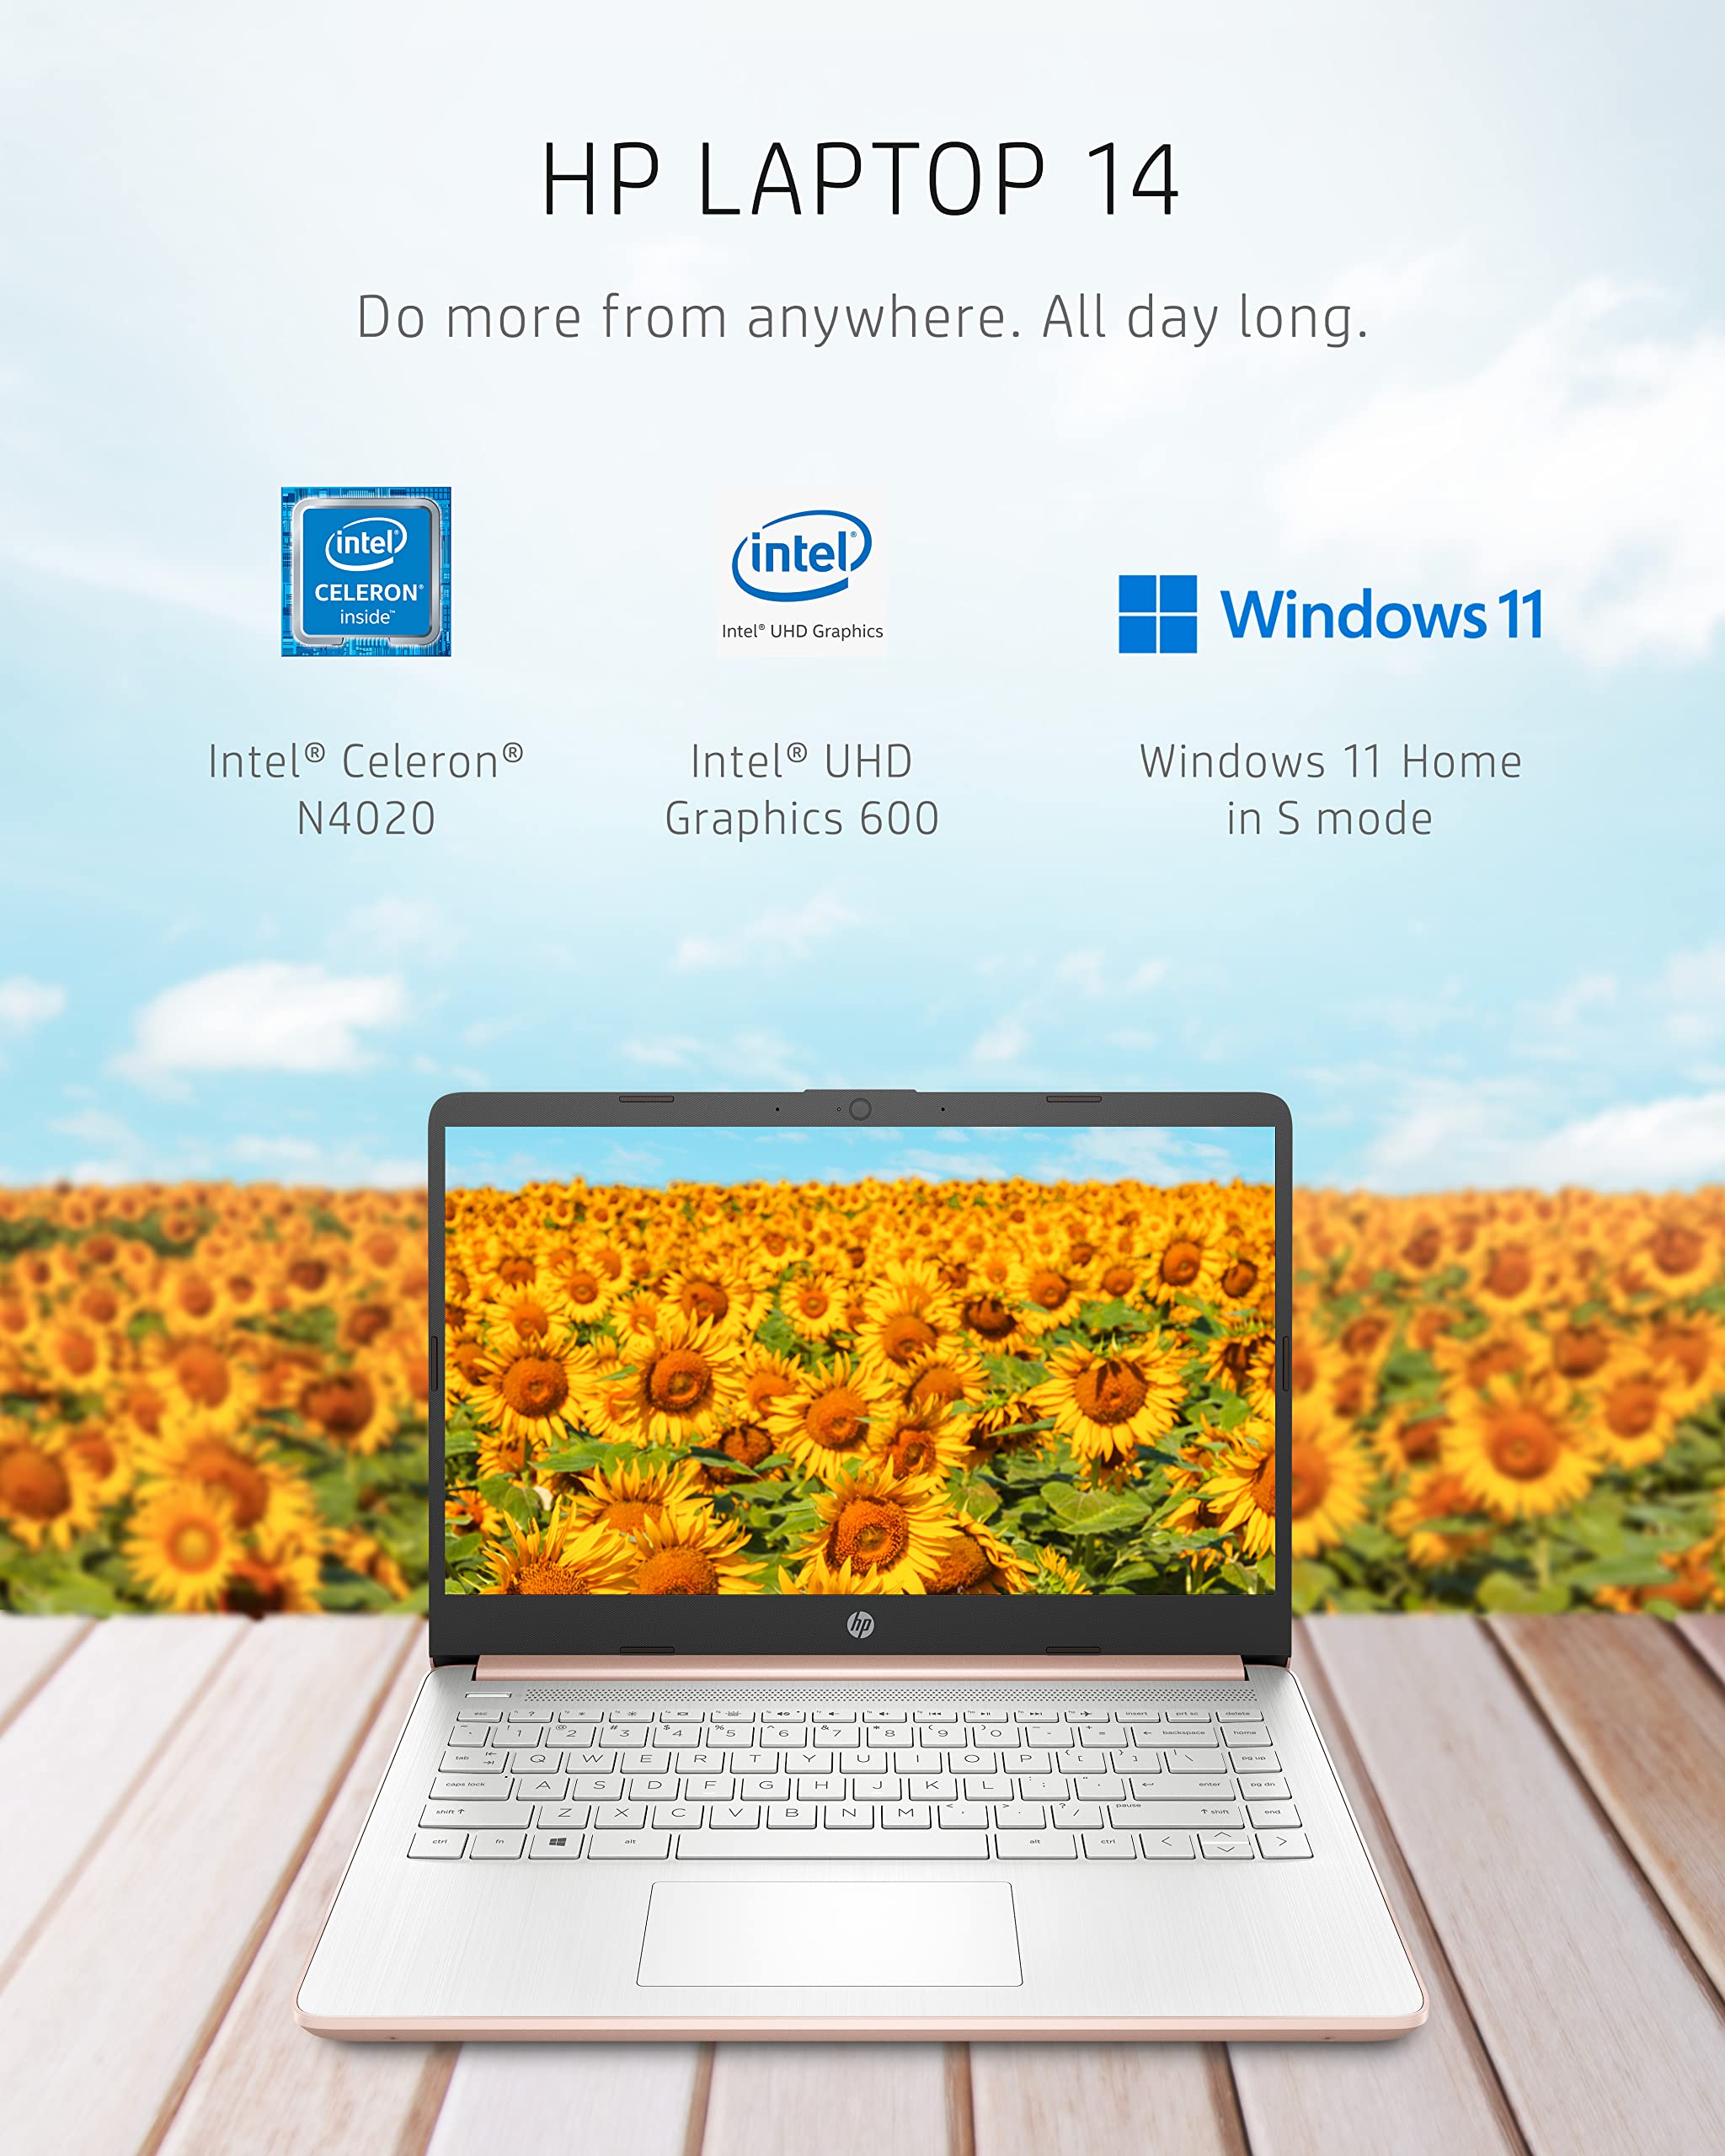 HP 14 Laptop, Intel Celeron N4020, 4 GB RAM, 64 GB Storage, 14-inch HD Touchscreen, Windows 11 Home, Thin & Portable, 4K Graphics, One Year of Microsoft 365 (14-dq0070nr, 2021, Pale Rose Gold)